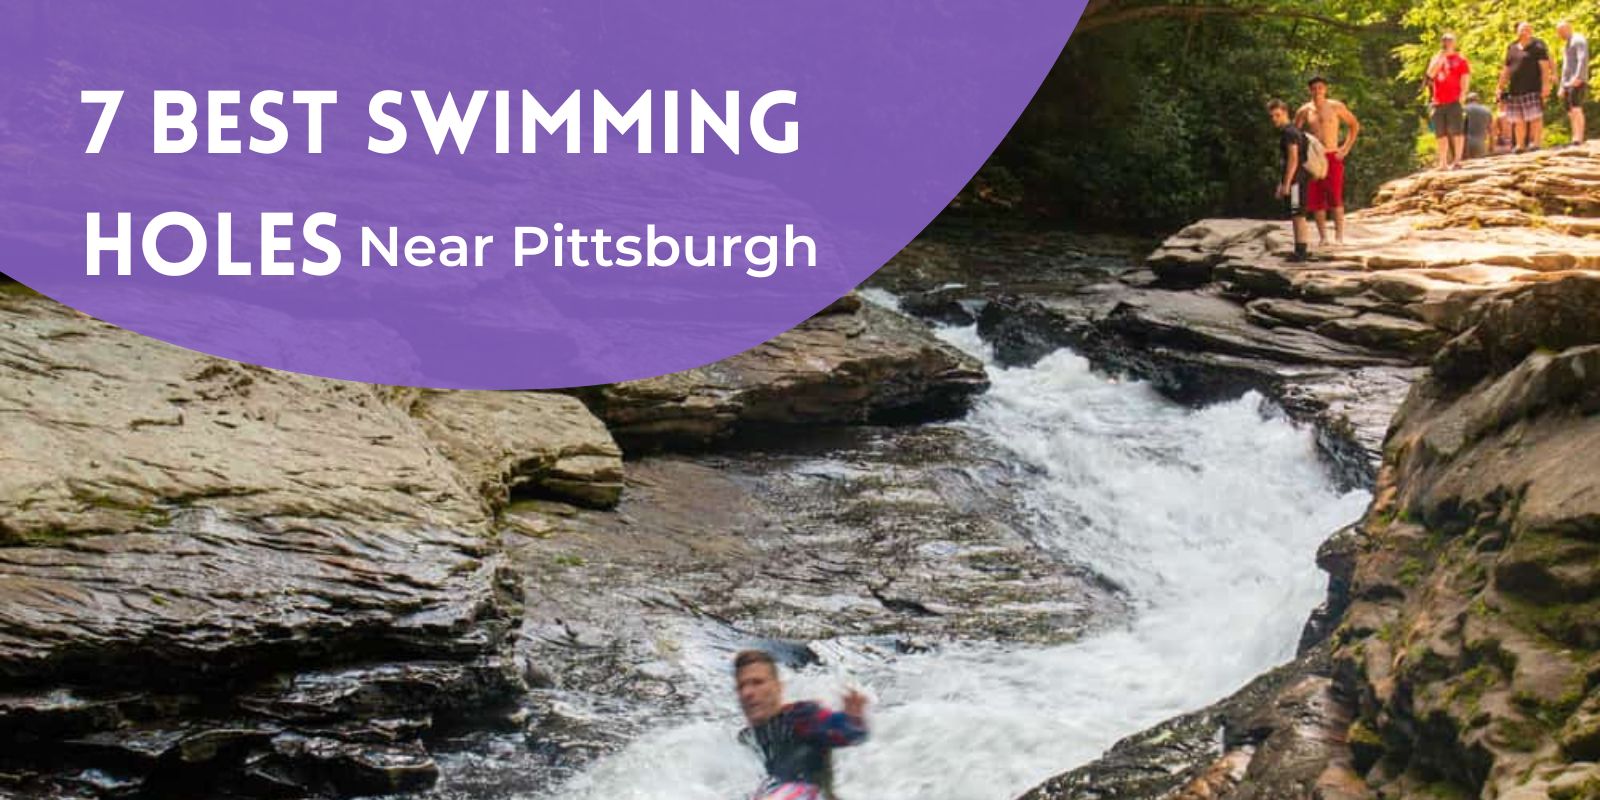 7 Best Swimming Holes Near Pittsburgh